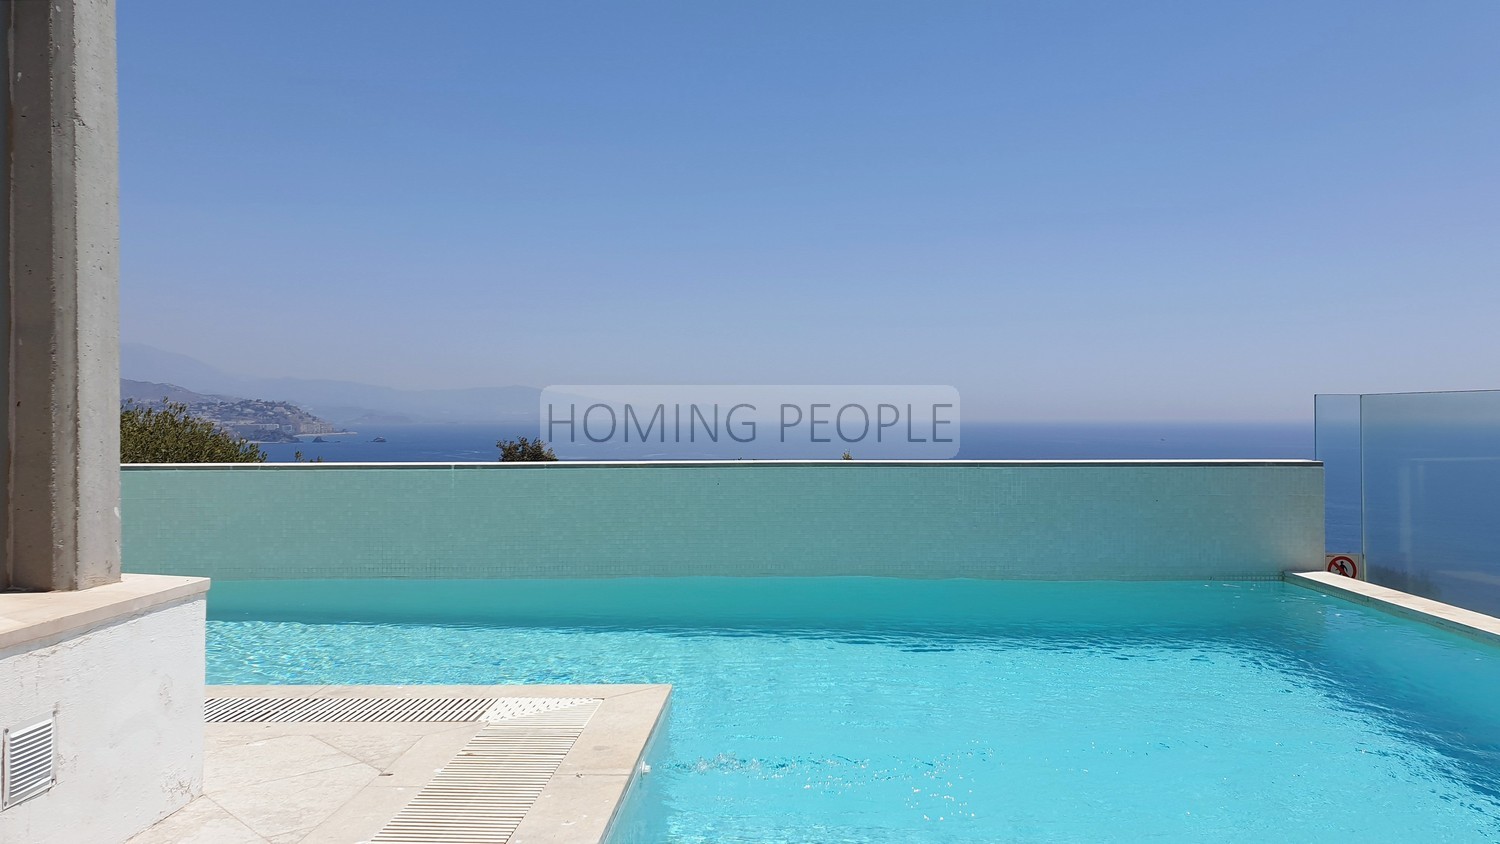 Beautiful and modern-design villa on a cliff overlooking the Mediterranean Sea